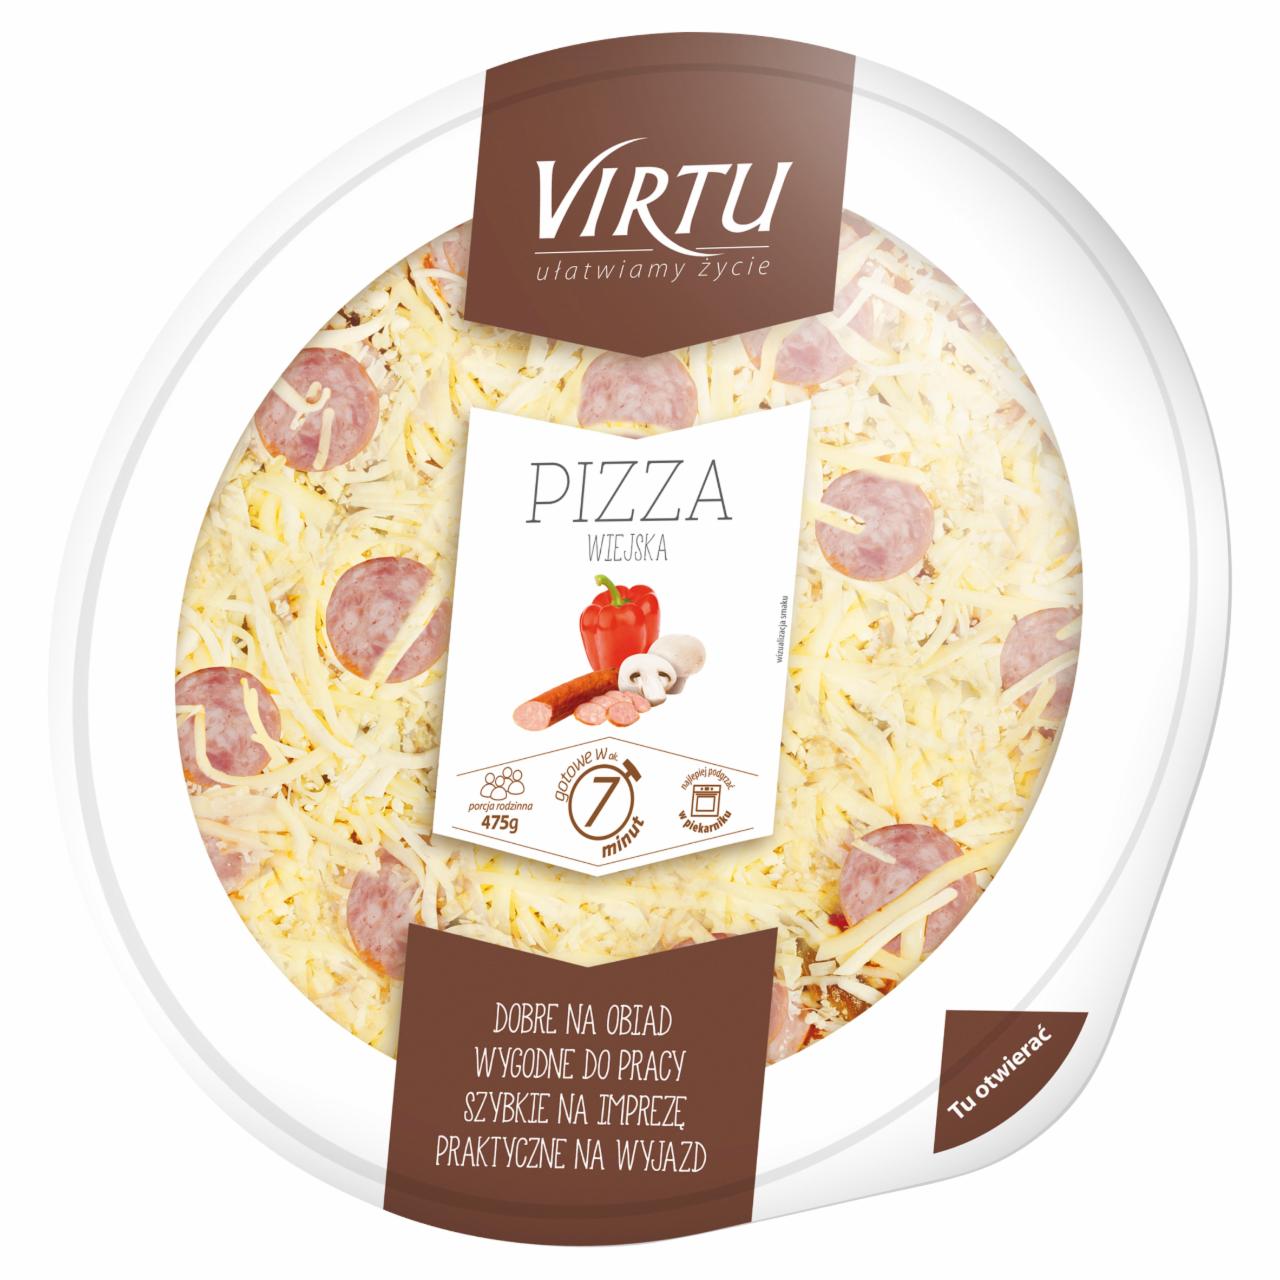 Zdjęcia - Virtu Pizza wiejska 475 g